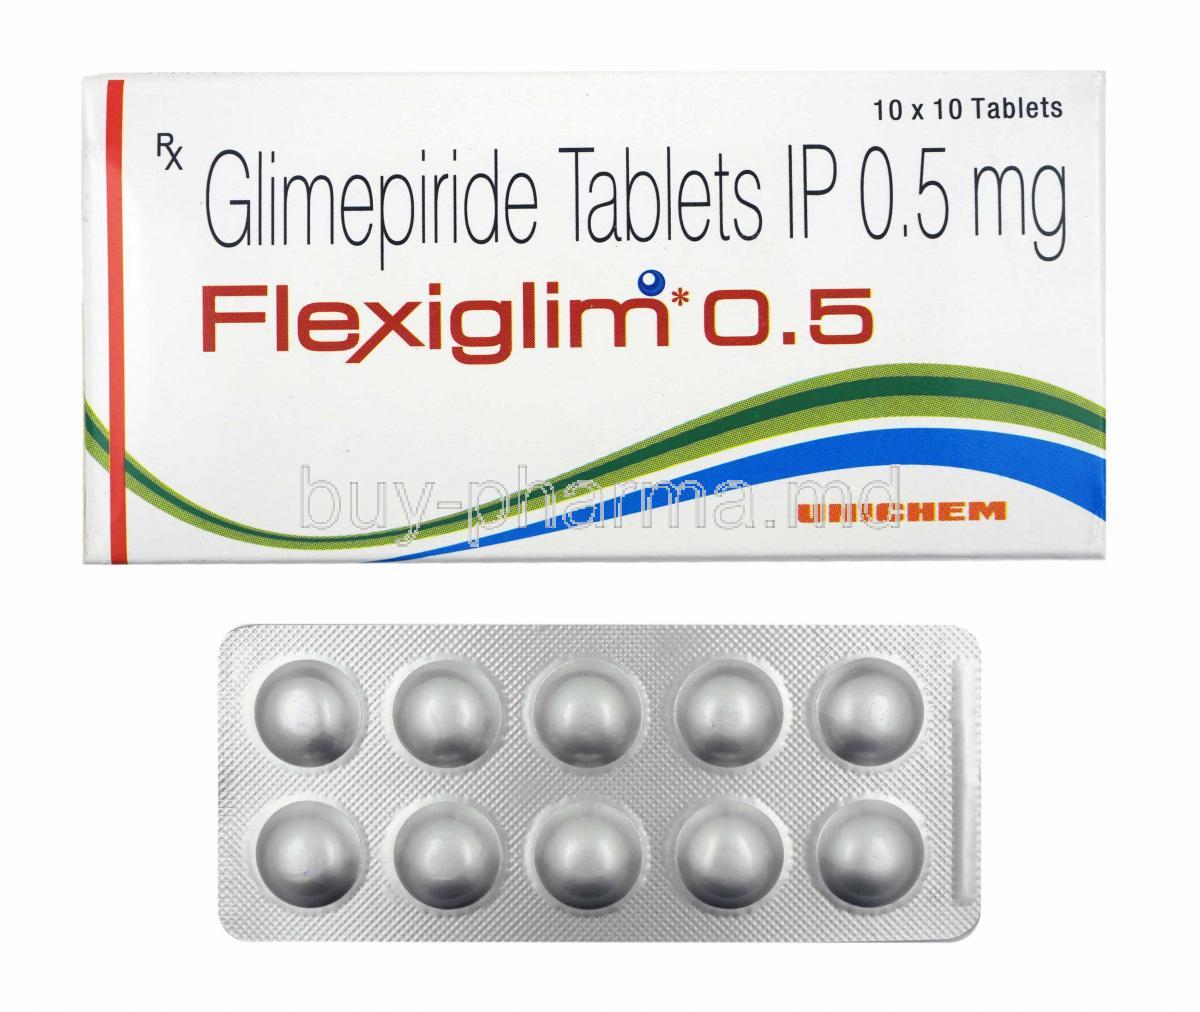 Flexiglim, Glimepiride 0.5mg box and tablets